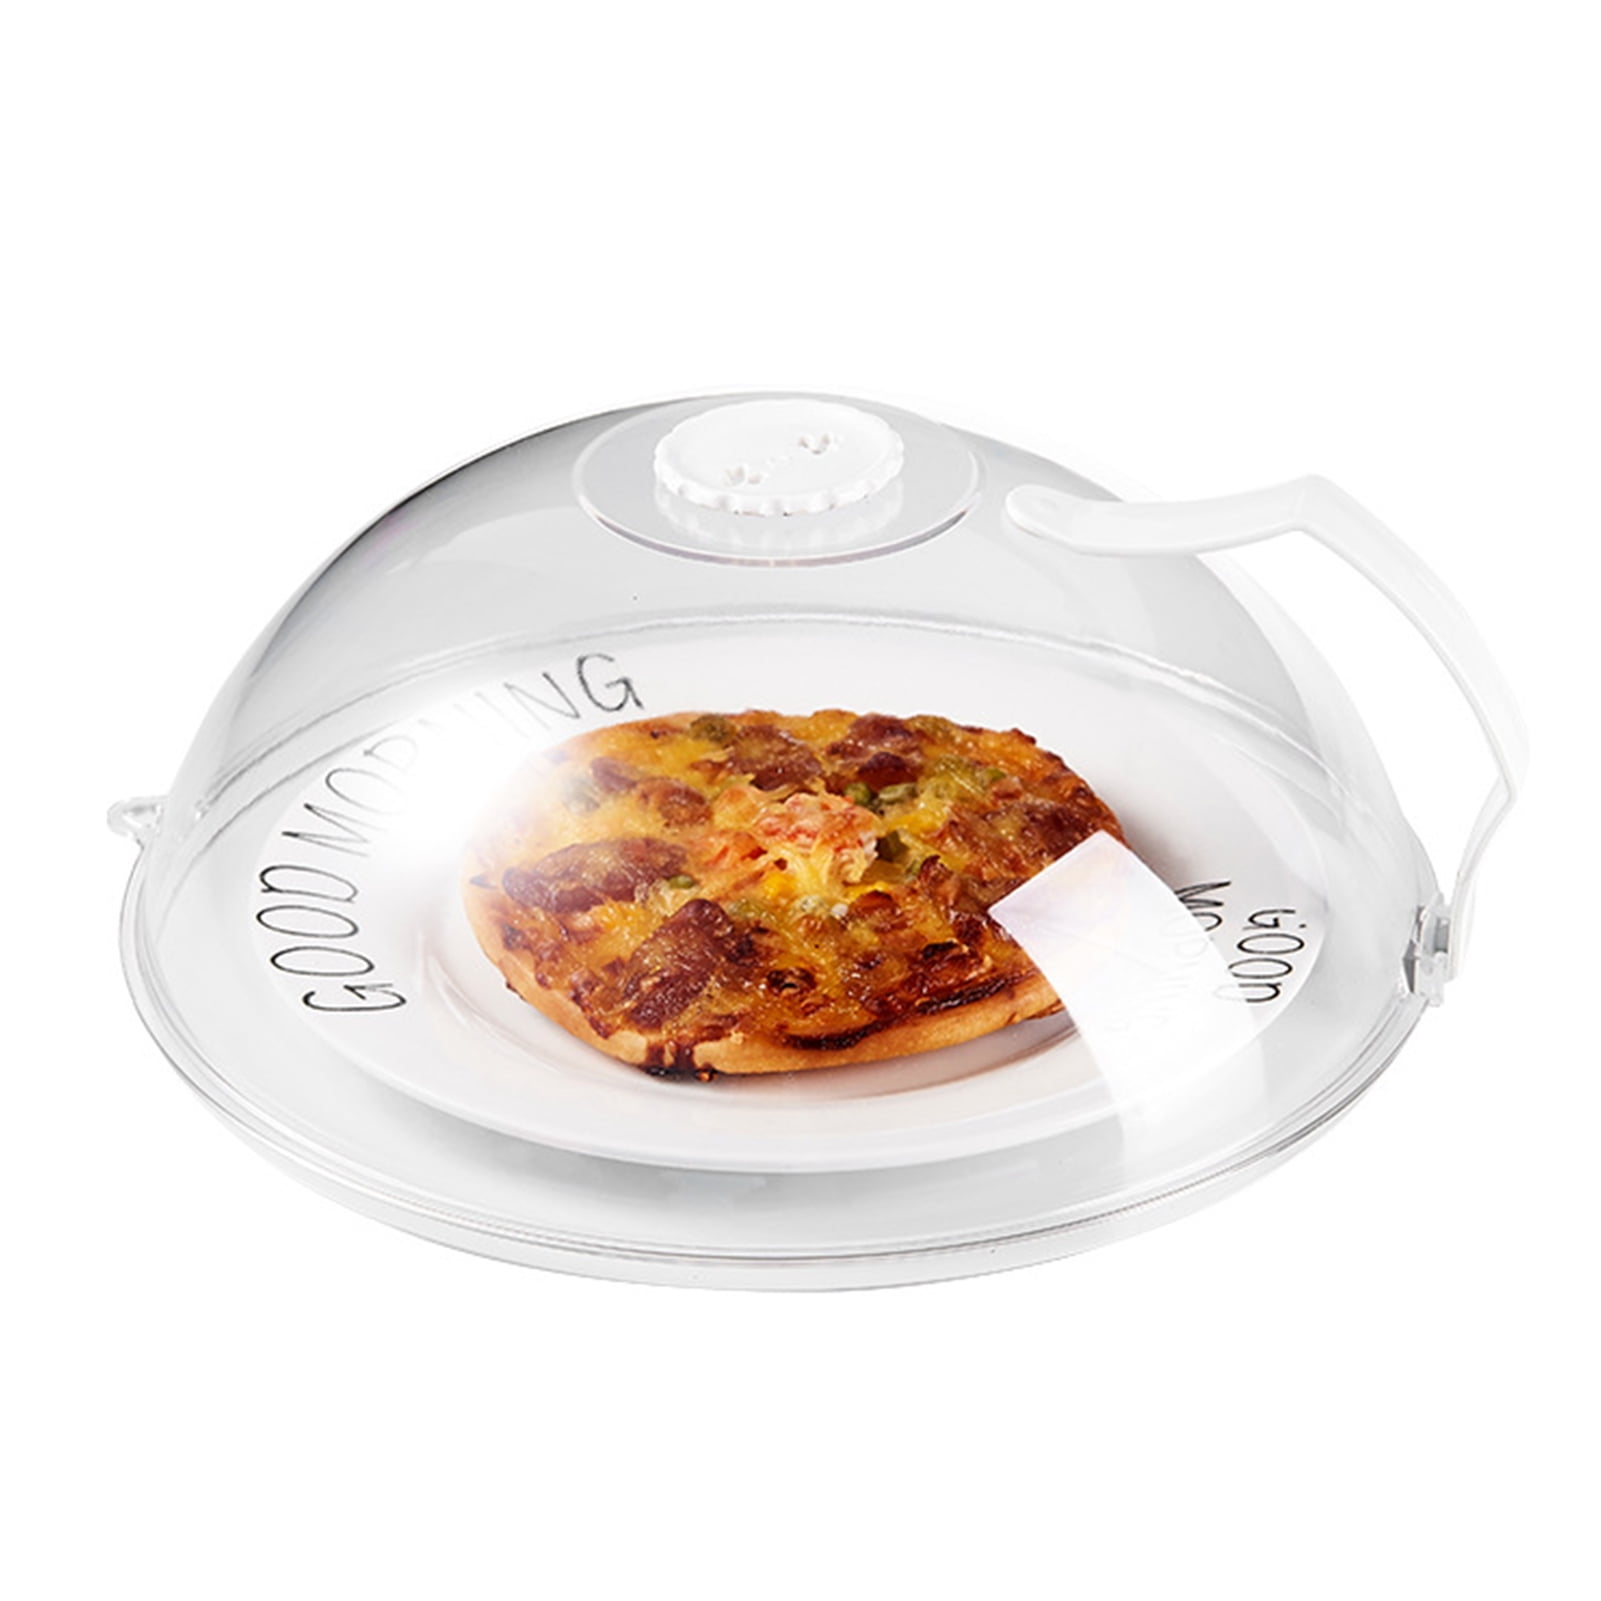 Microwave Splatter Cover for Food, Clear like Gla Microwave Splash